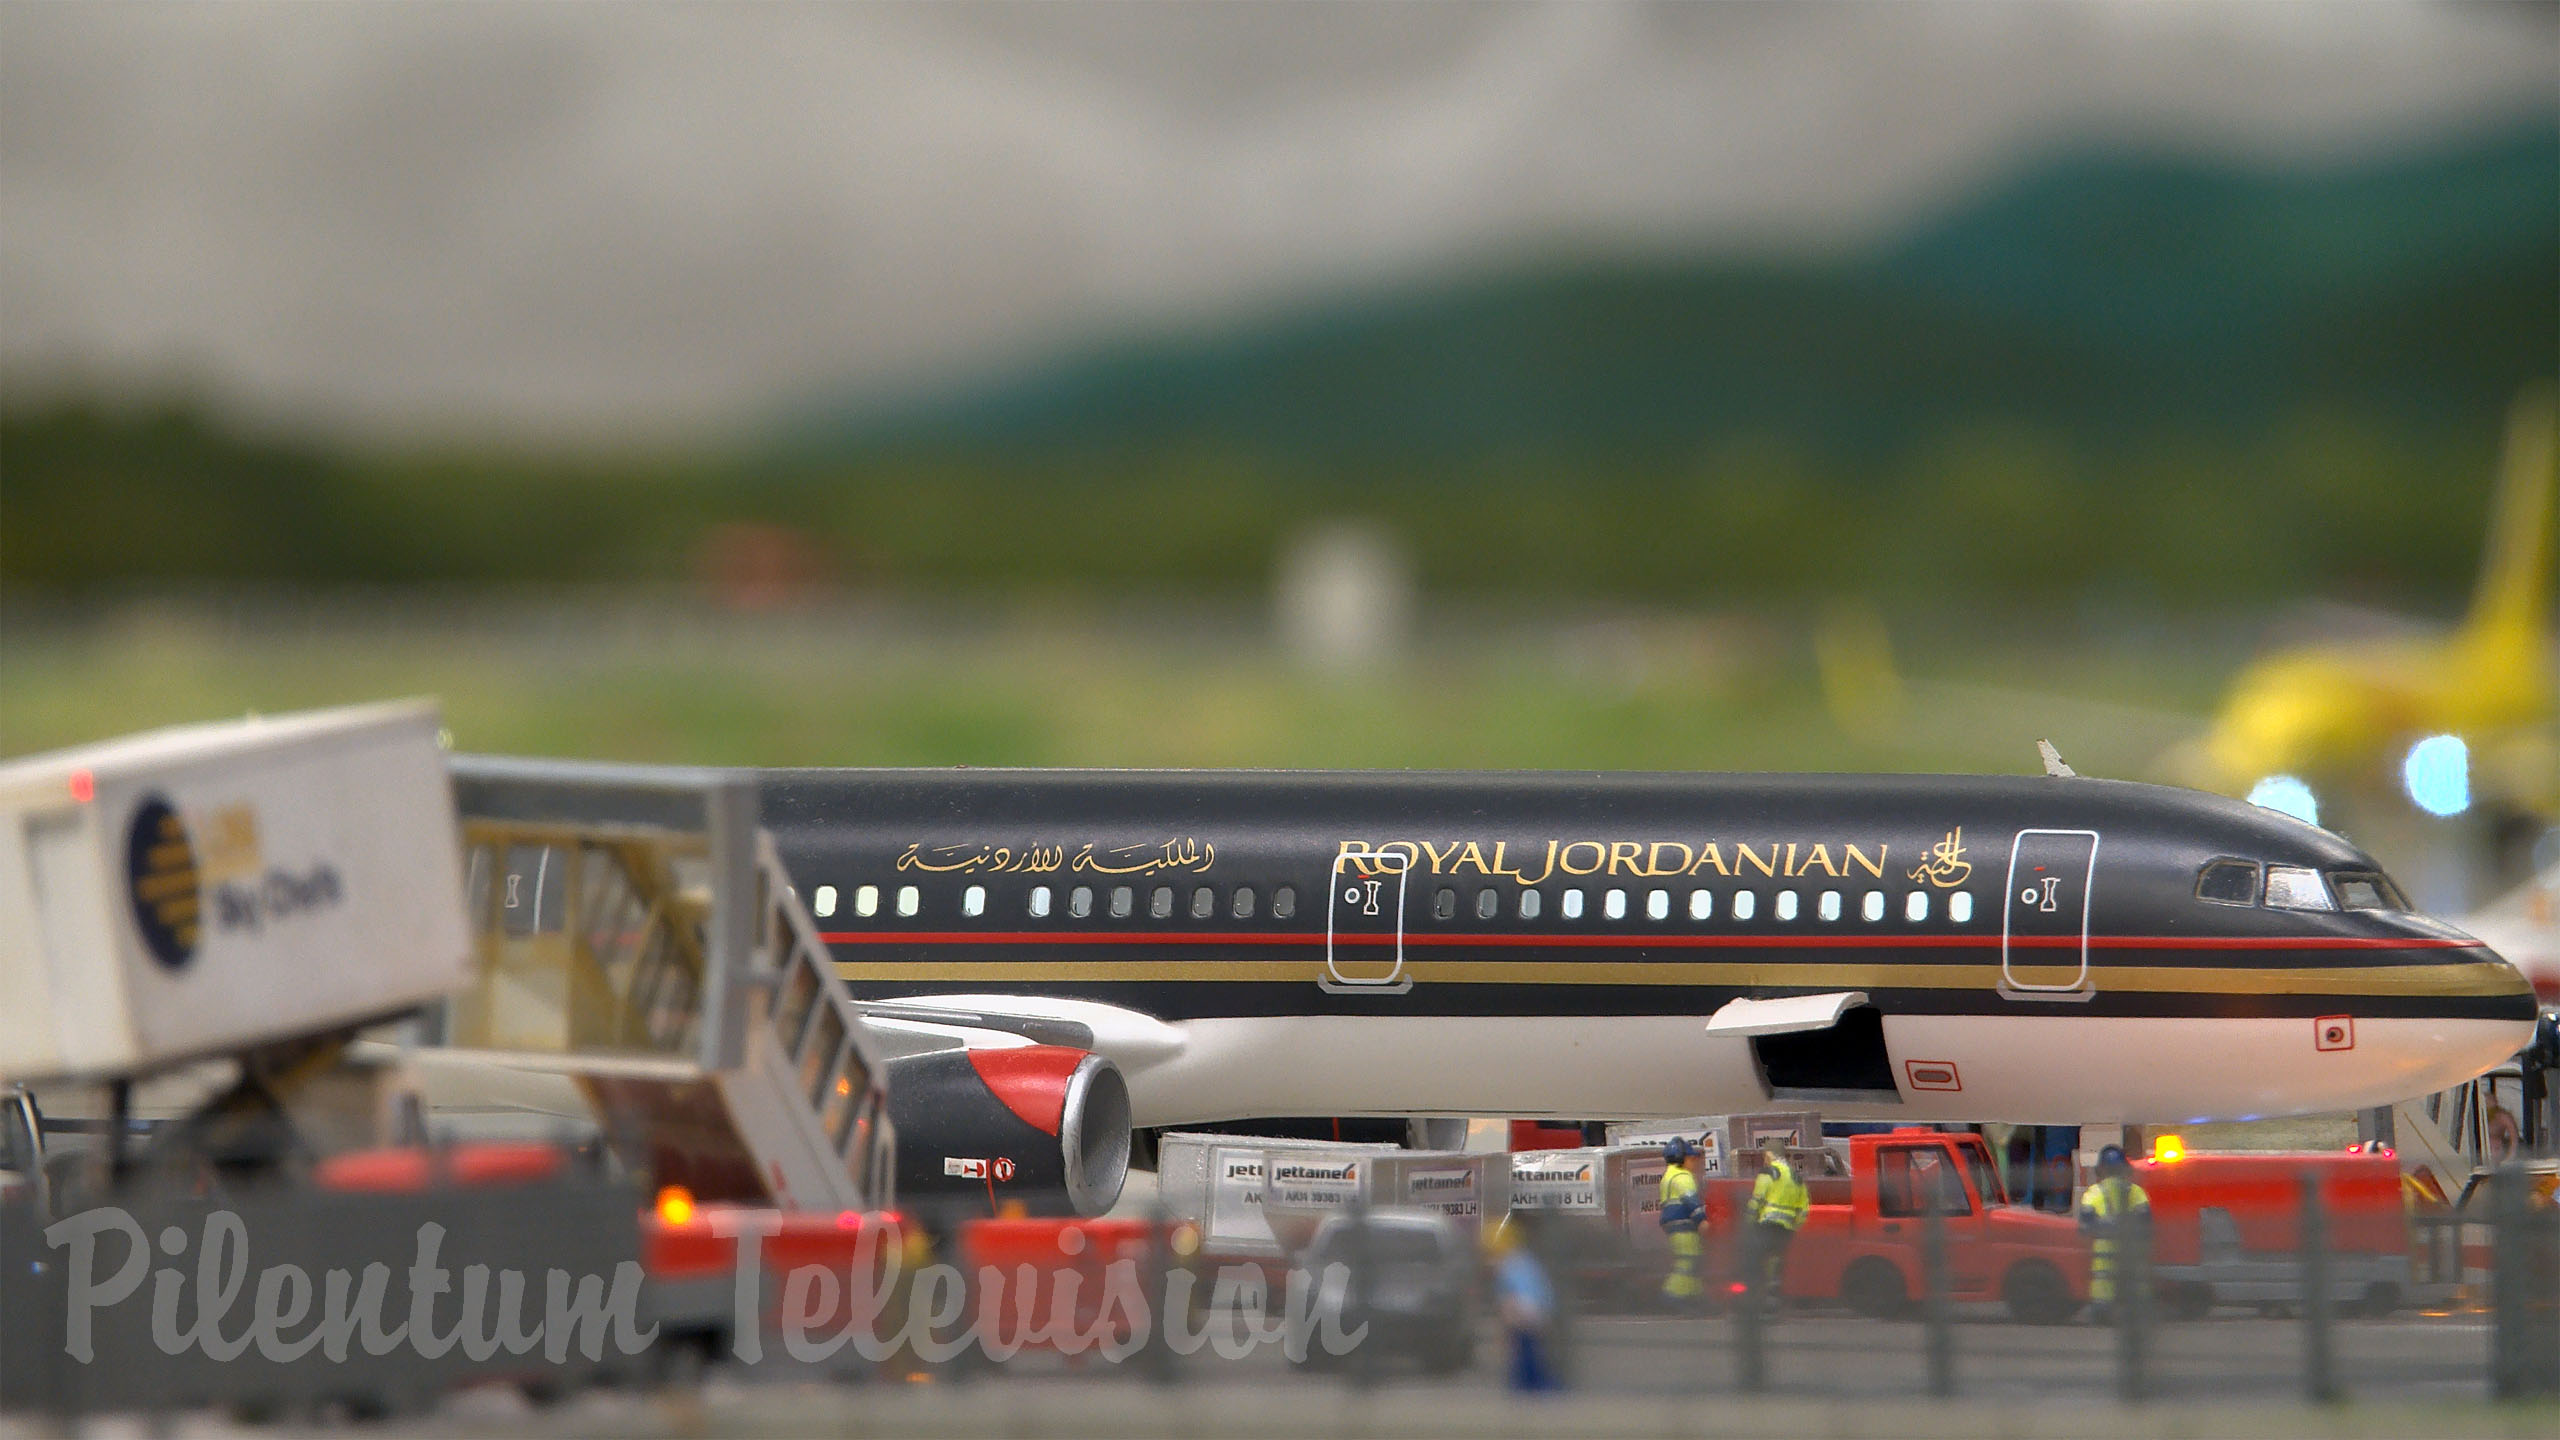 Den største model lufthavn i verden - flyveplads i miniature